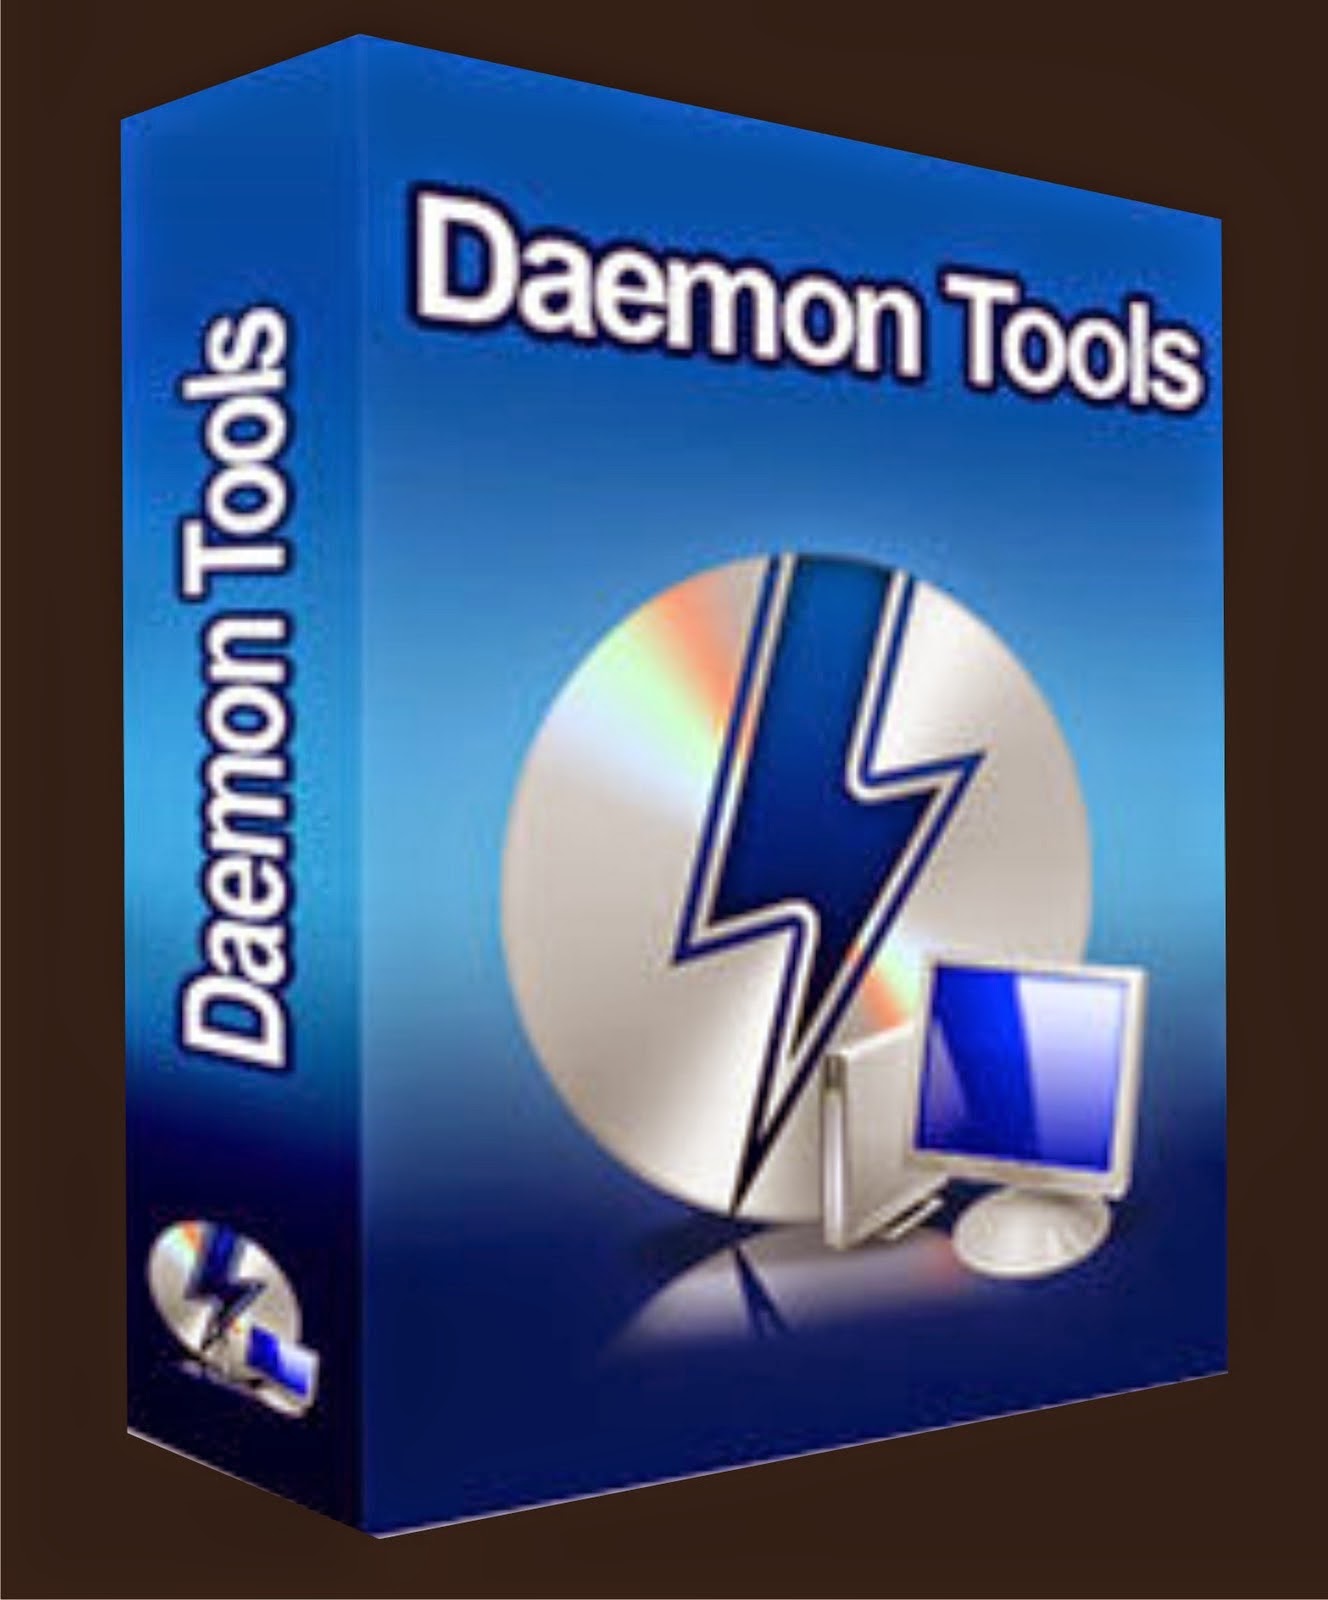 daemon tools pro download 64 bit